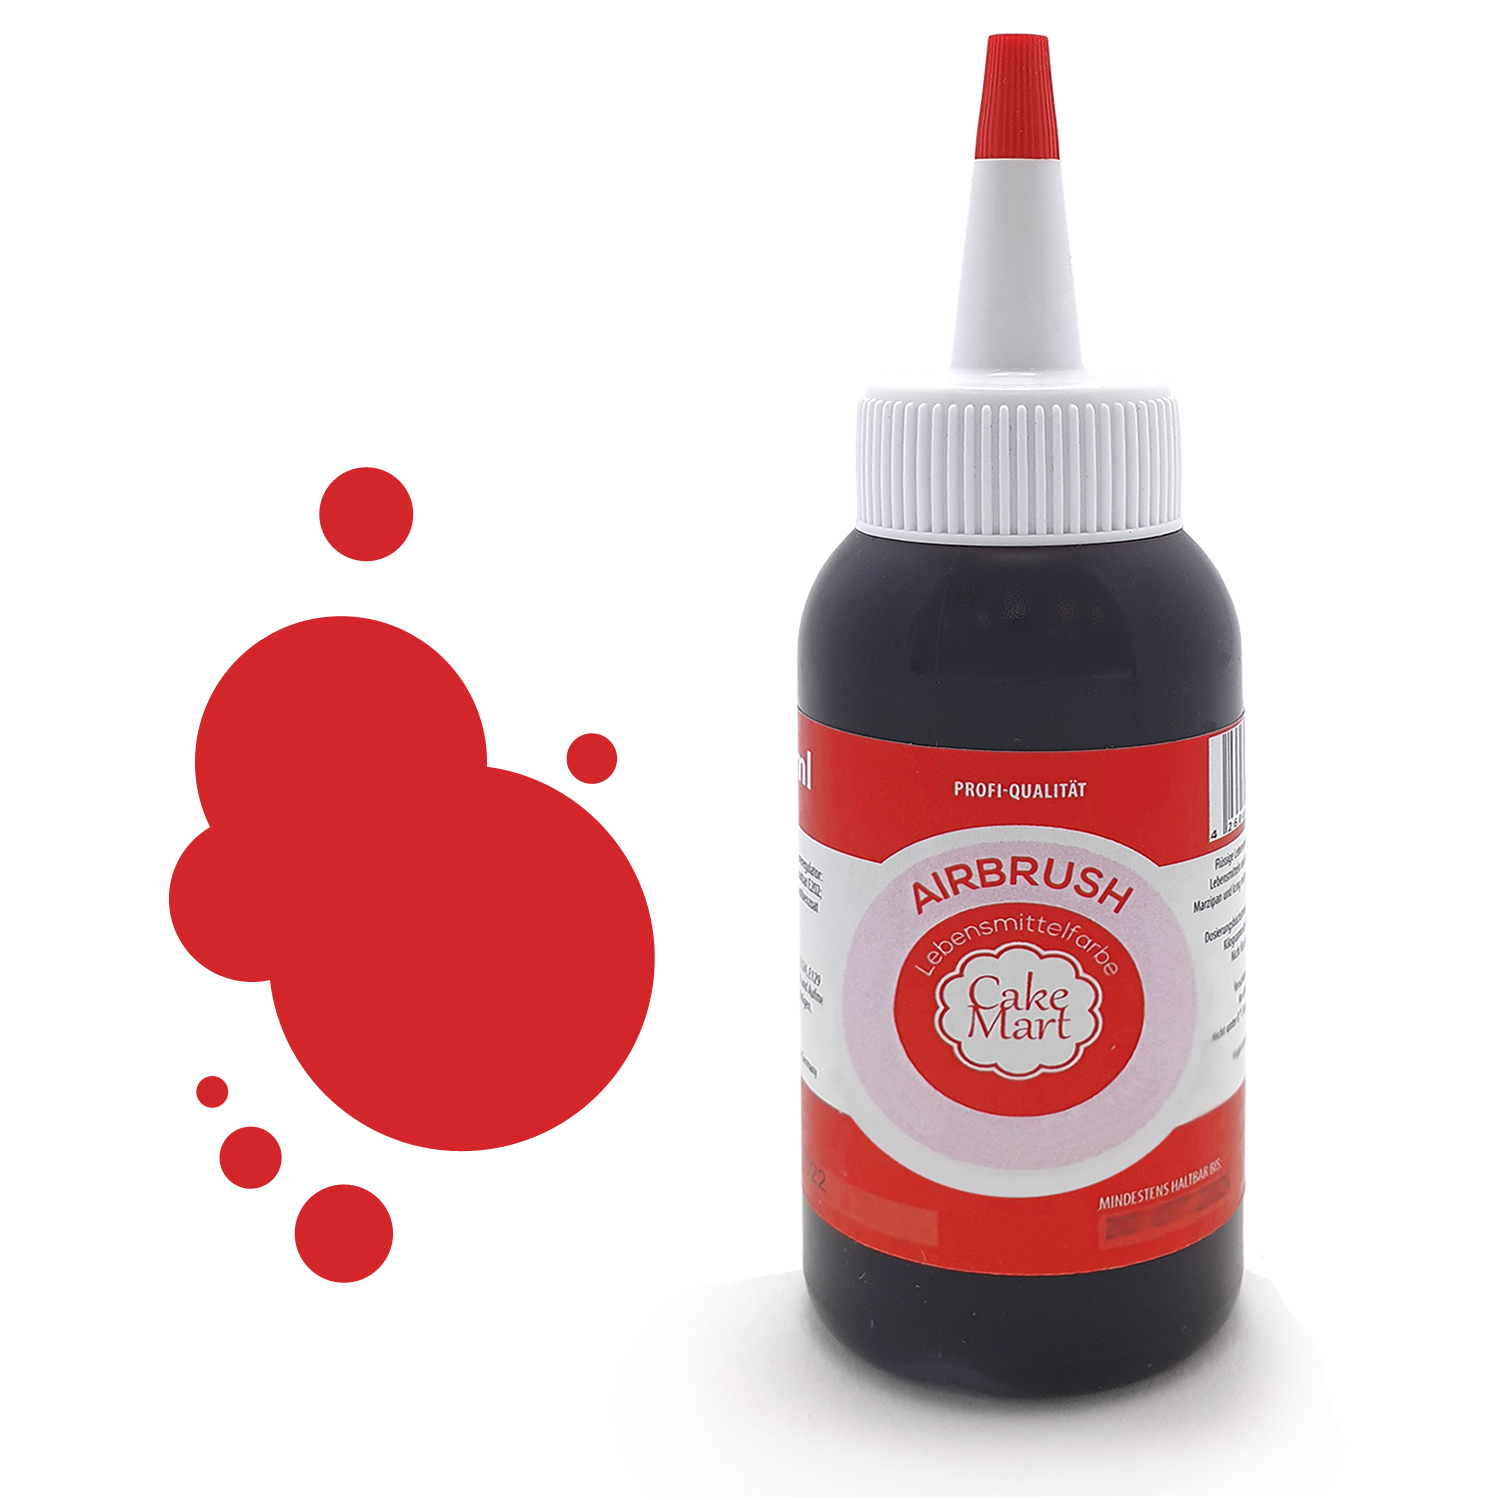 Airbrush-Lebensmittelfarbe "Rot", 75 ml | MEINCUPCAKE Shop